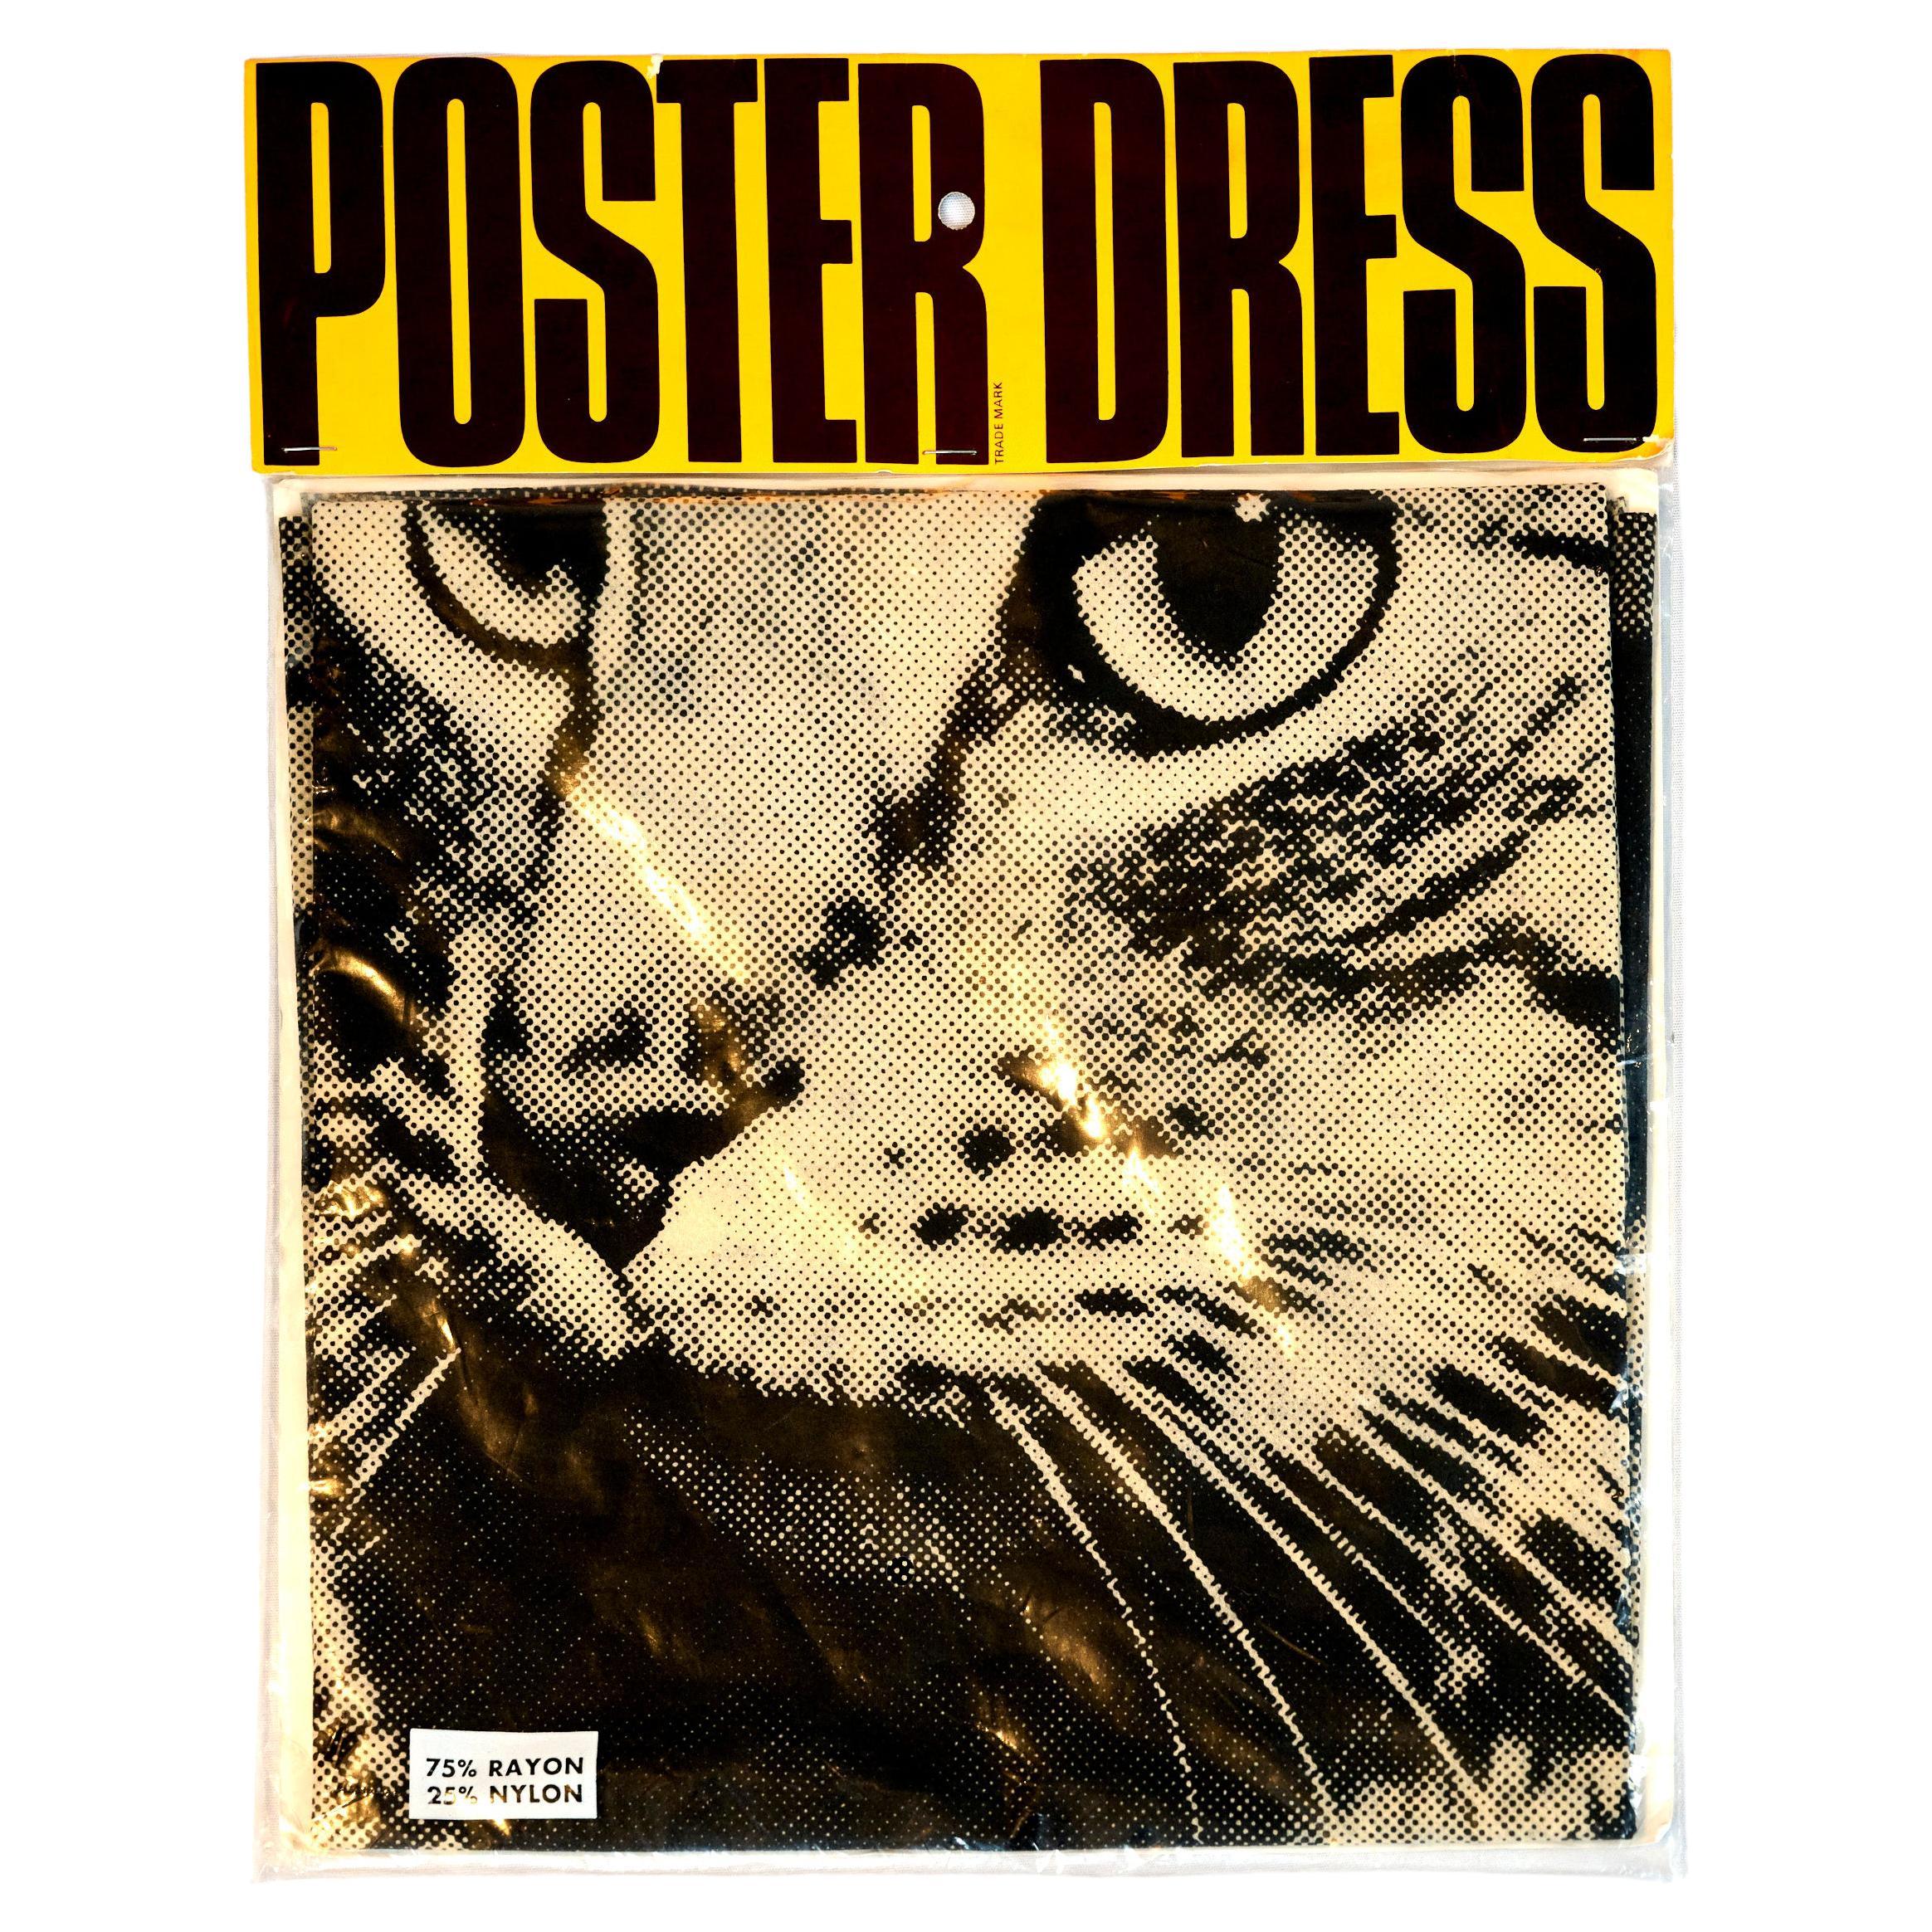 'Cat' by Harry Gordon, Poster Dresses Ltd, London, England, 1968 For Sale